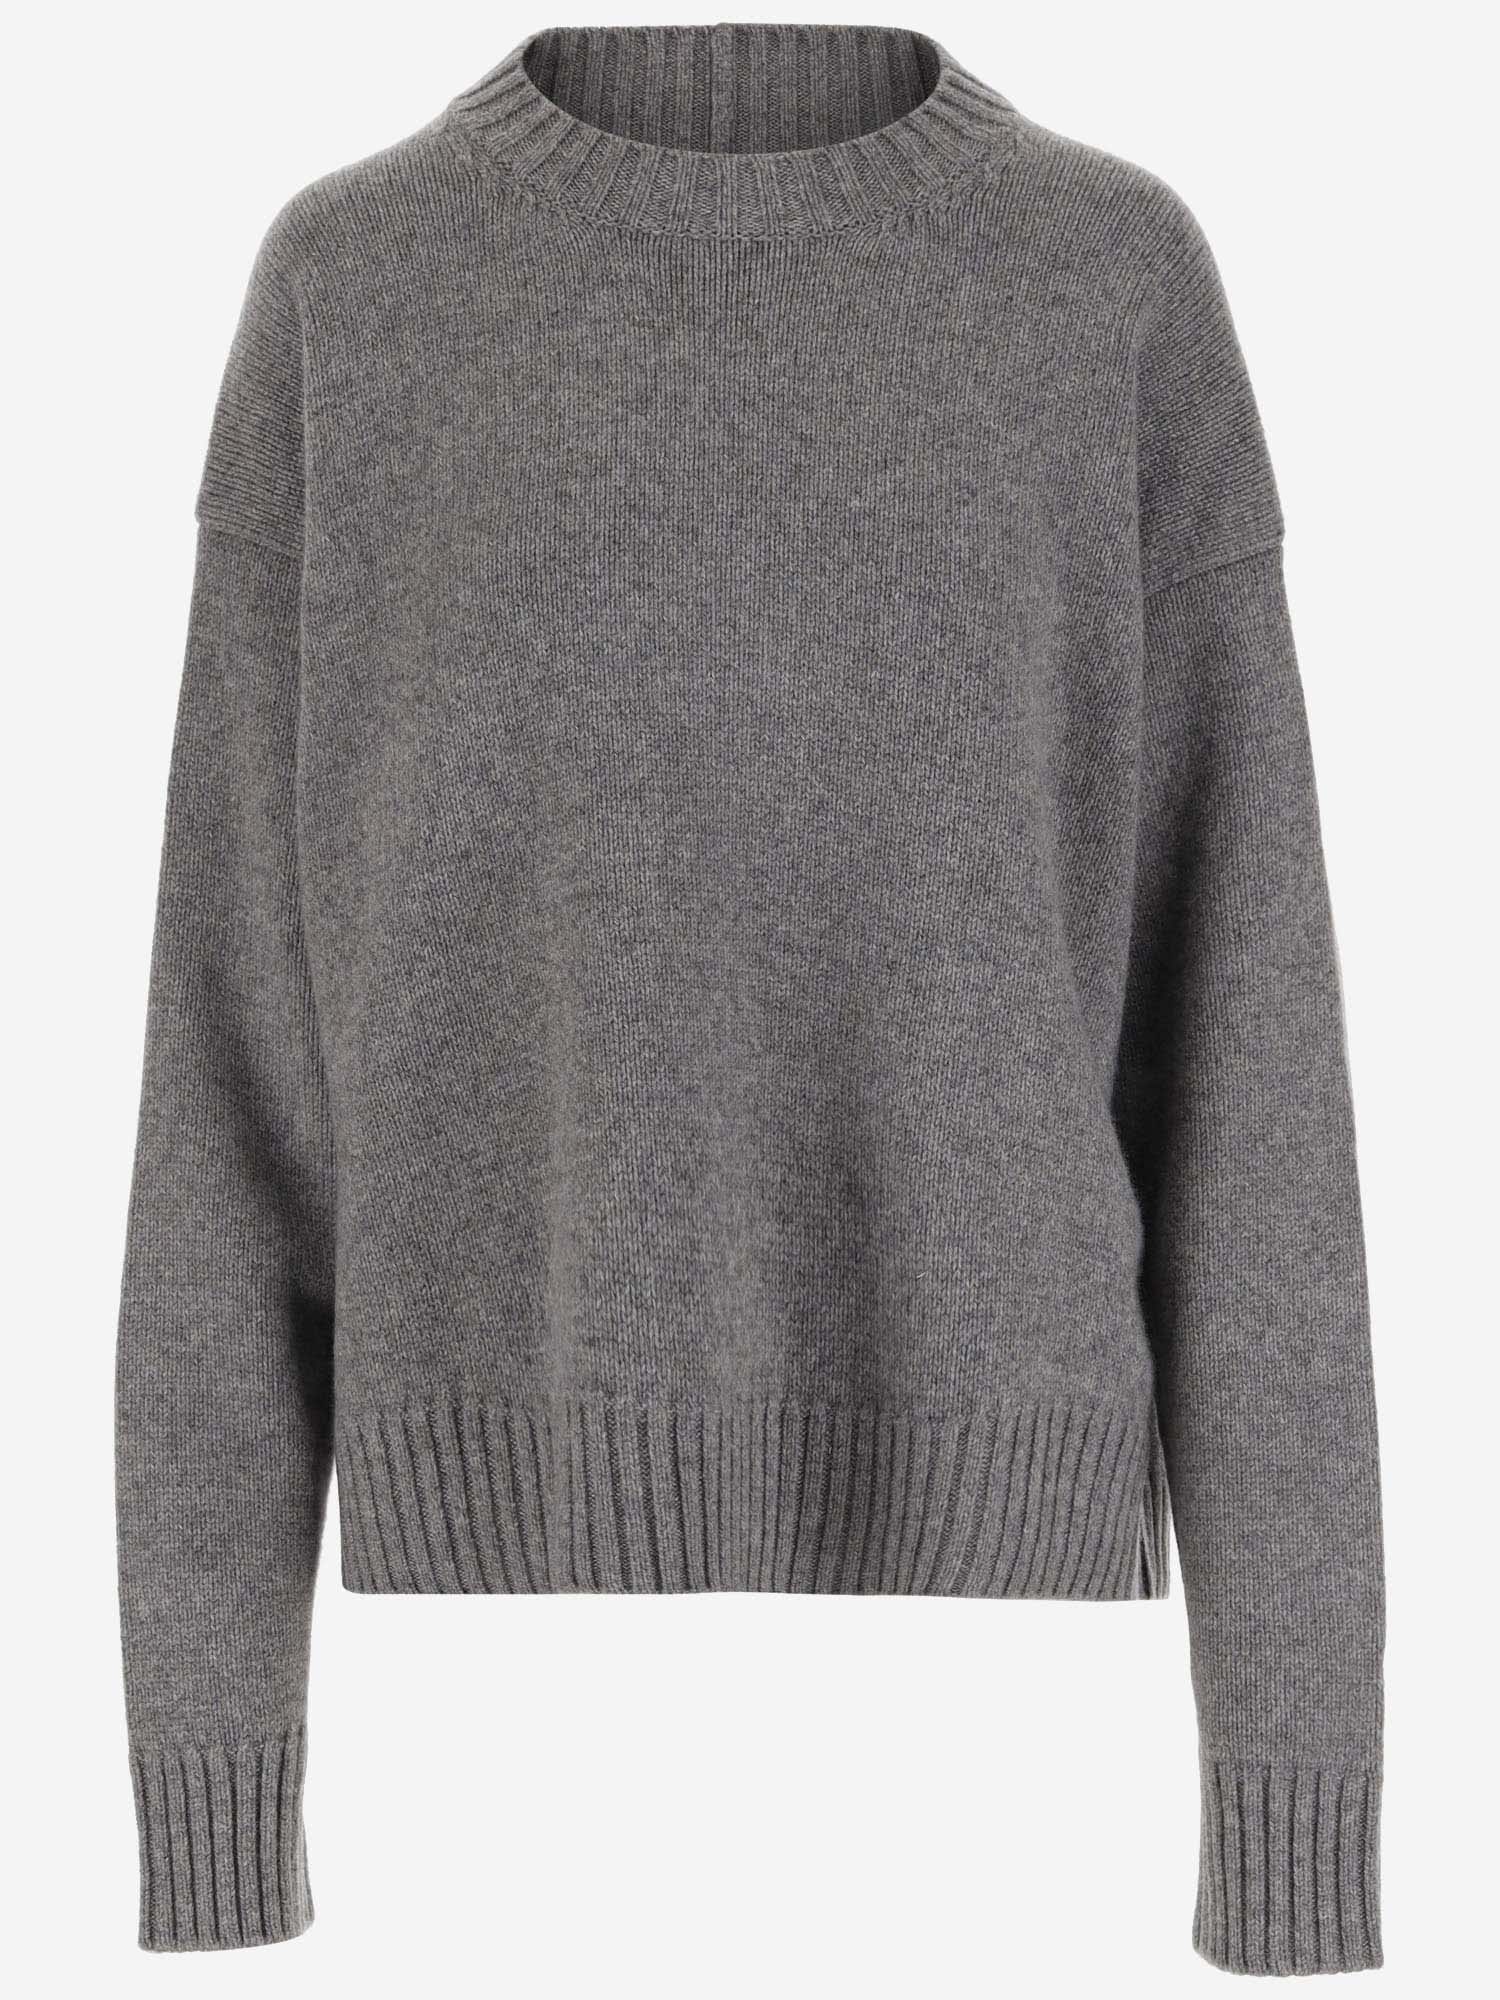 Jil Sander Cashmere Blend Sweater In Gray